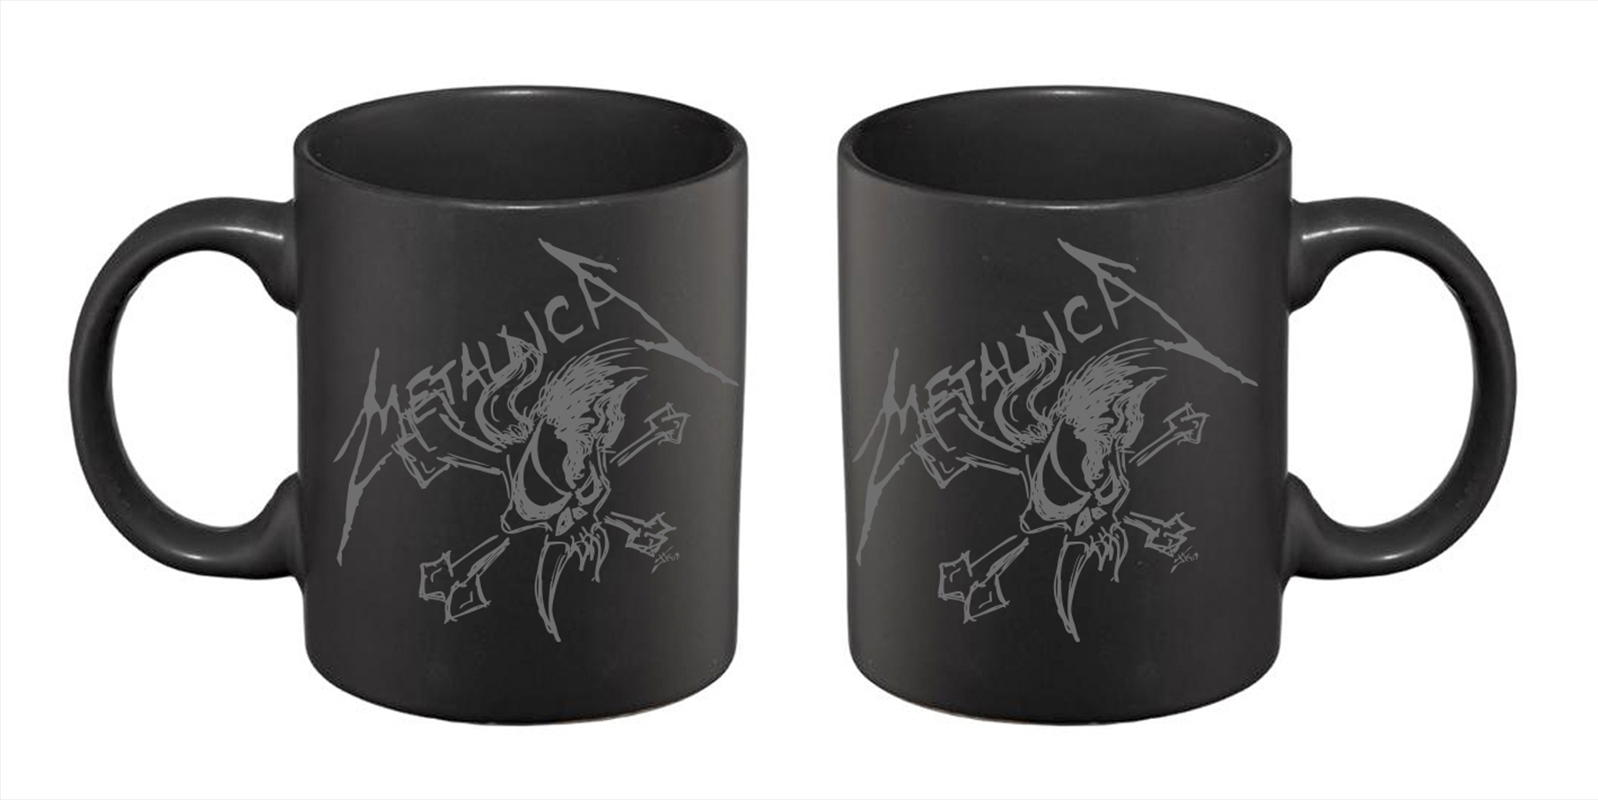 Metallica Mug - Scary Sketch/Product Detail/Mugs